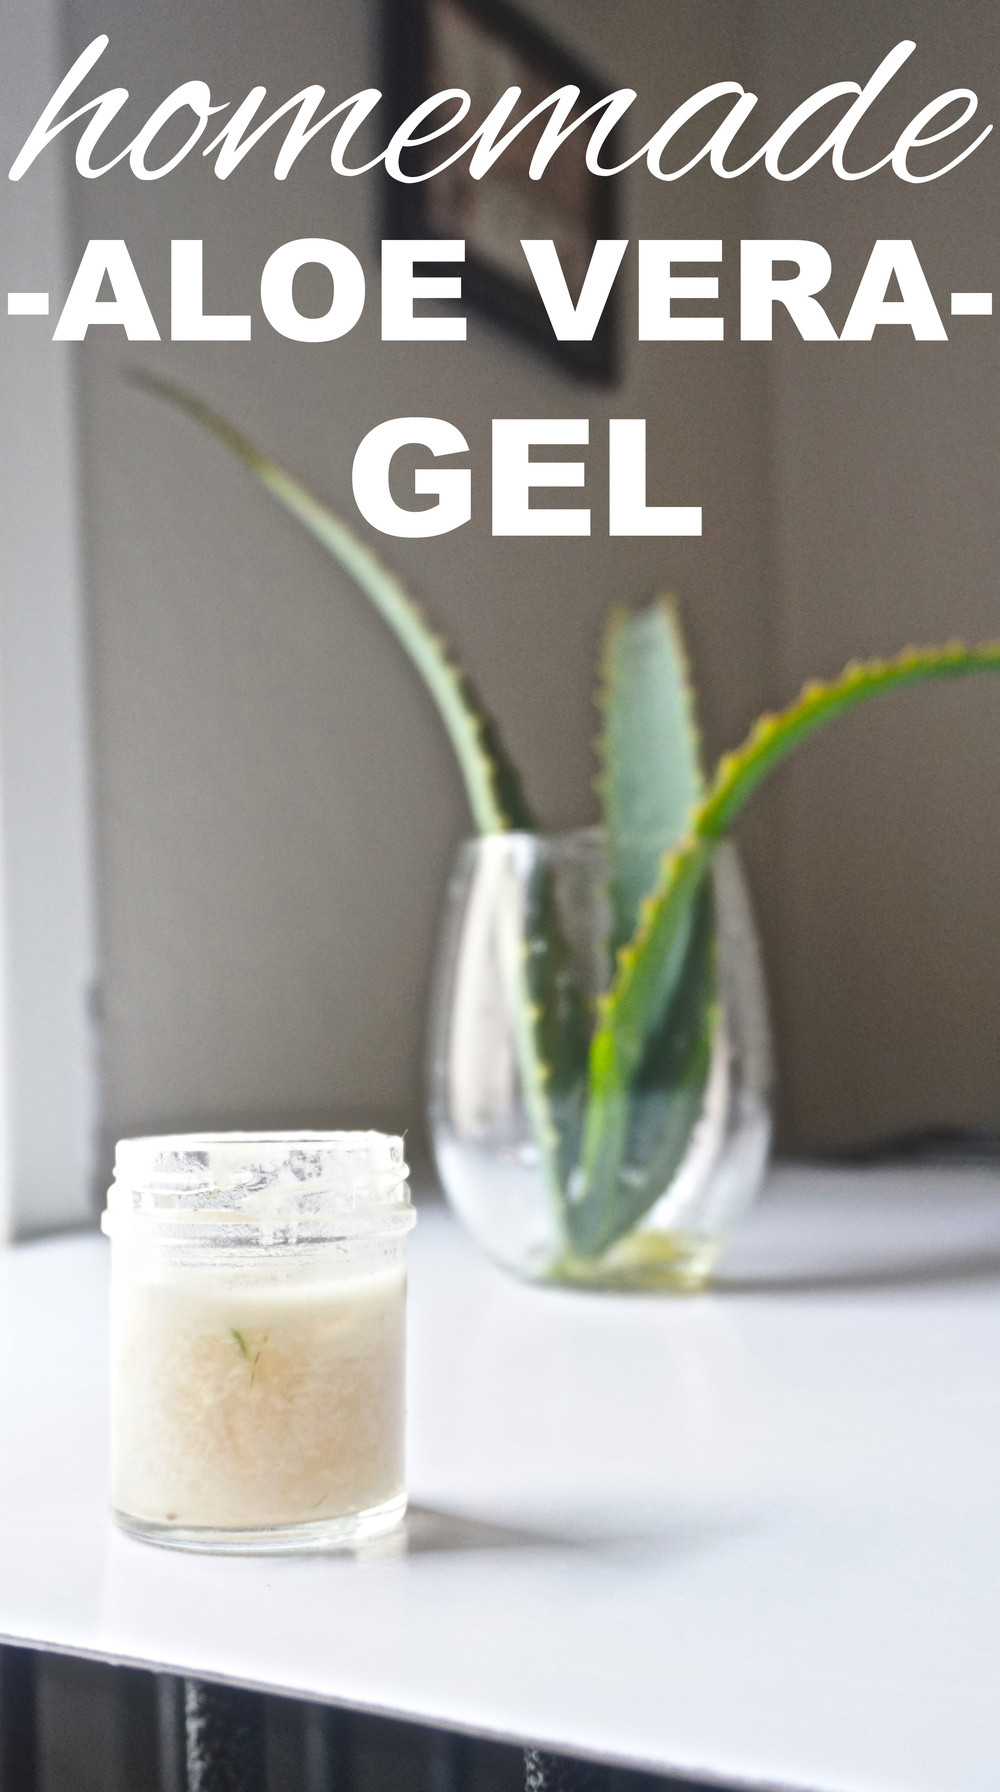 Best ideas about DIY Aloe Vera Gel
. Save or Pin Homemade Aloe Vera Gel Going Zero Waste Now.